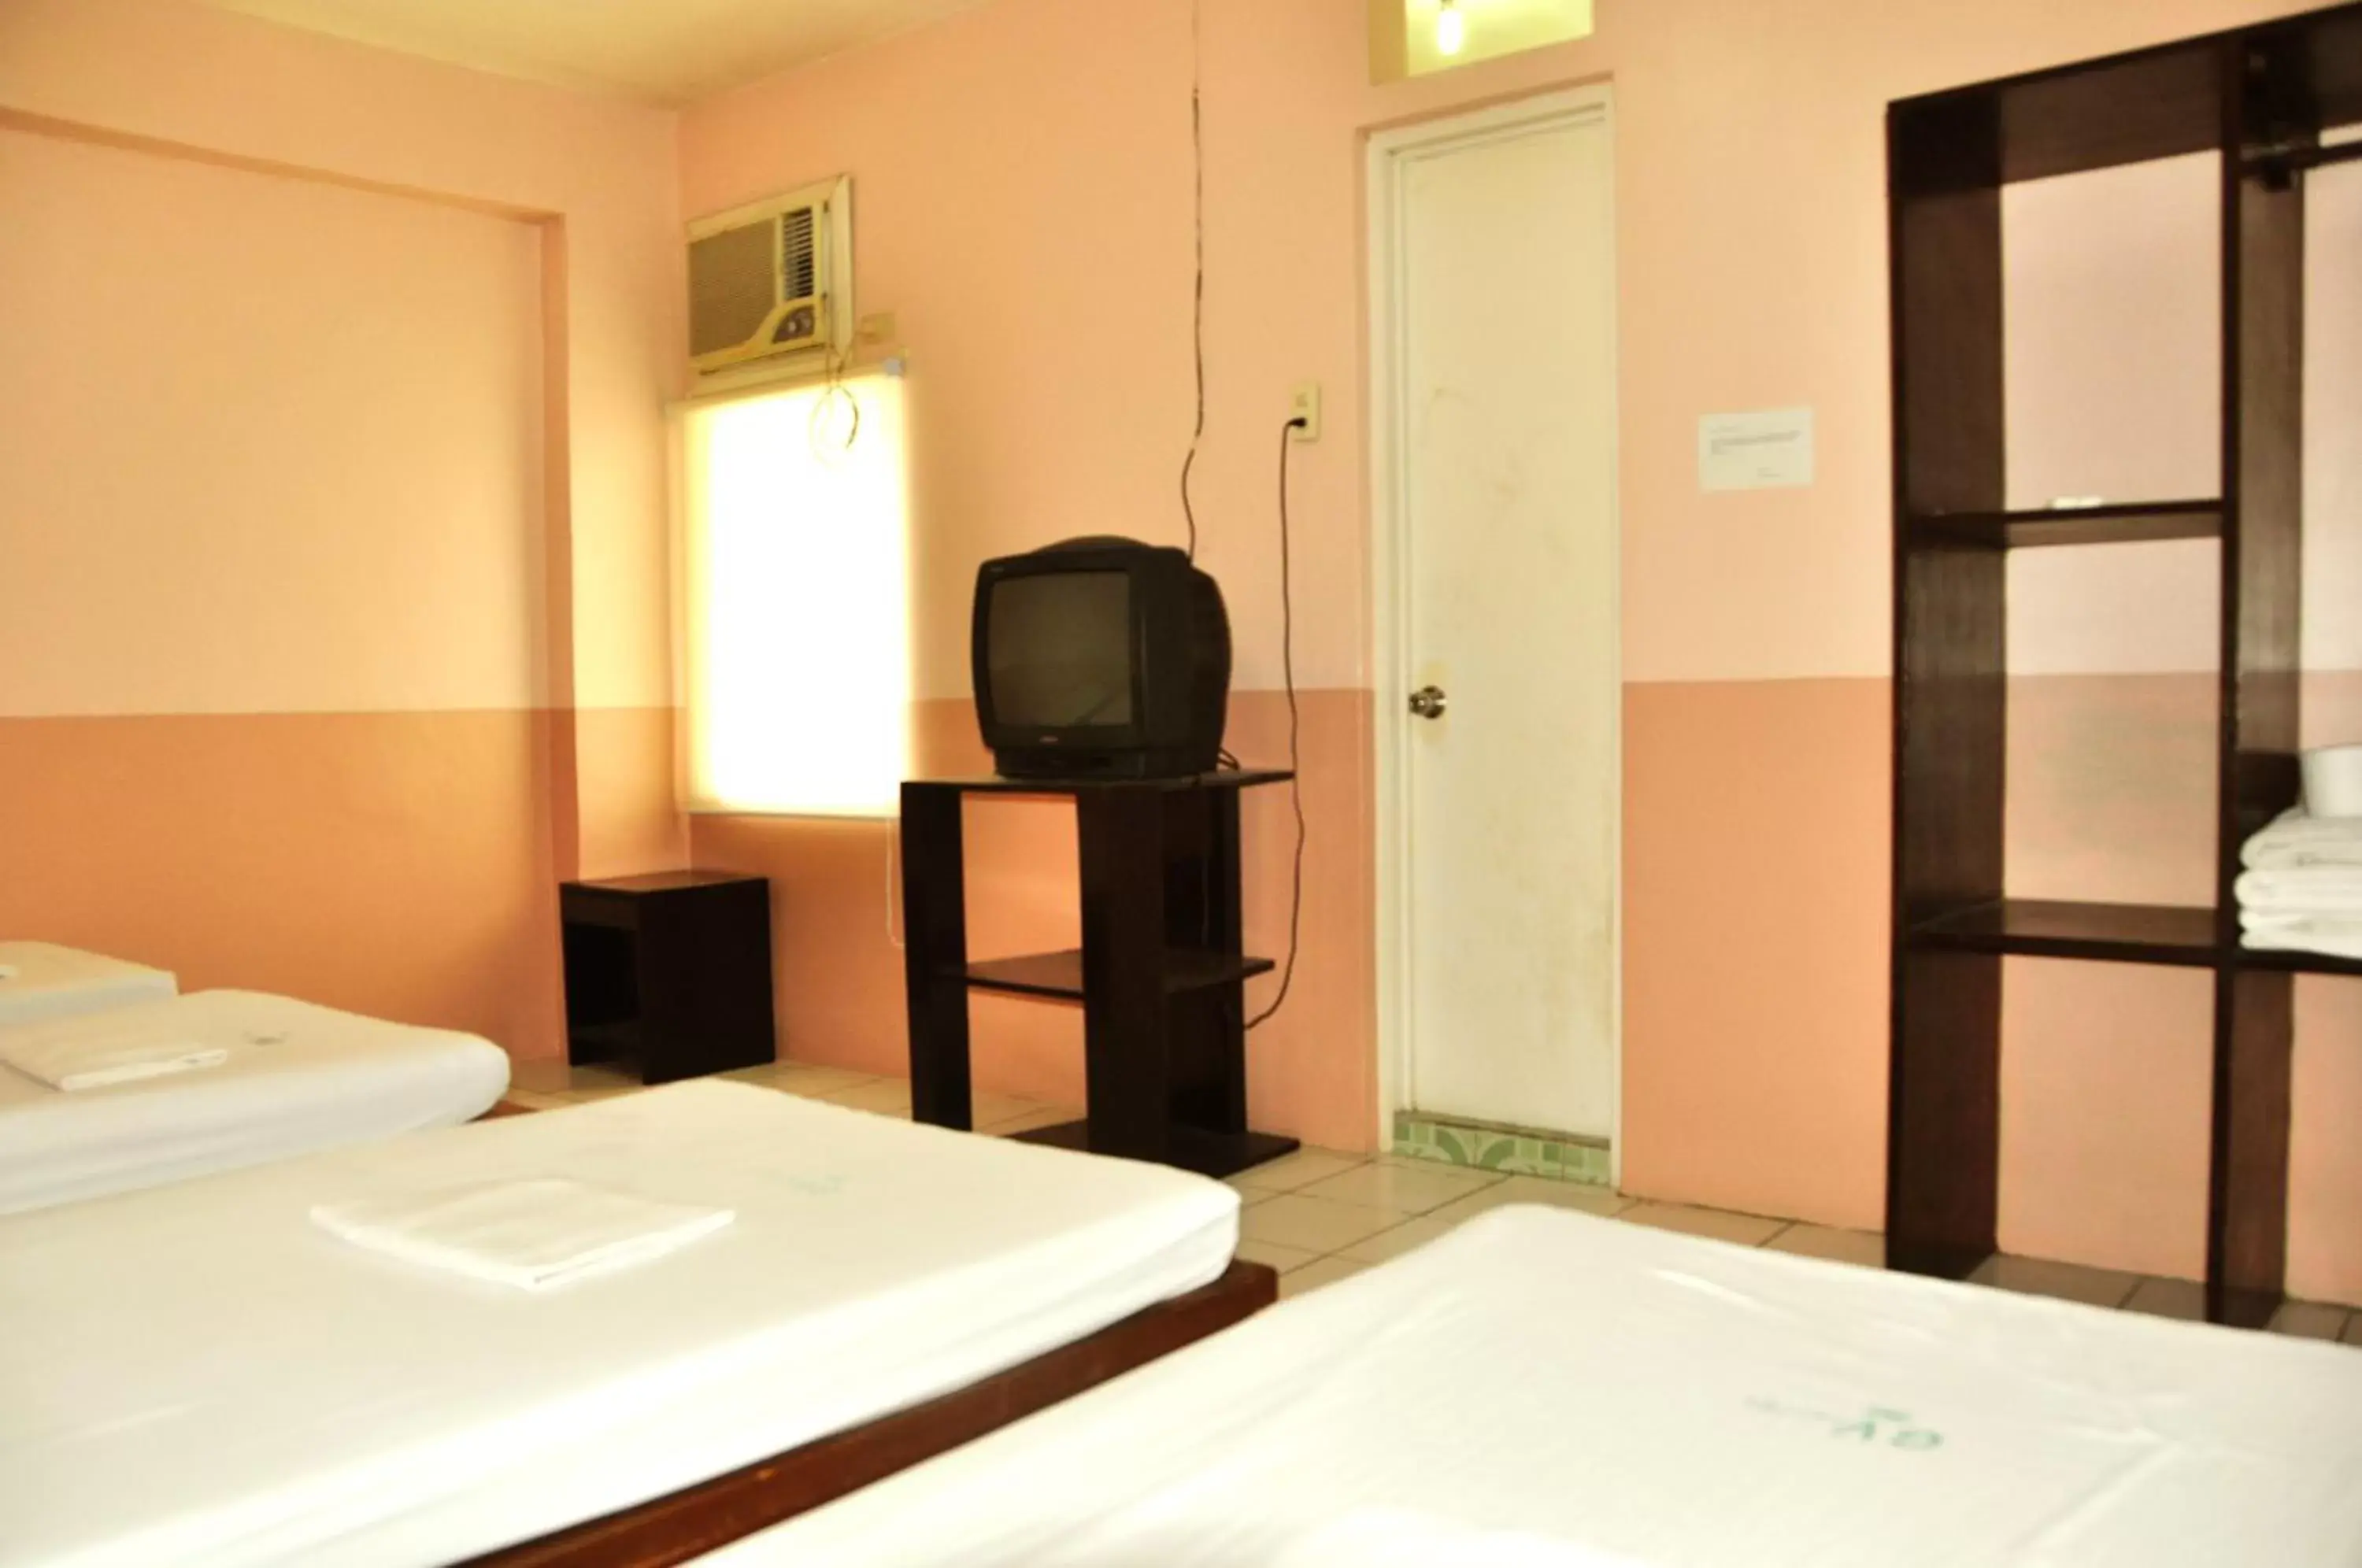 Bed in GV Hotel - Lapu-Lapu City